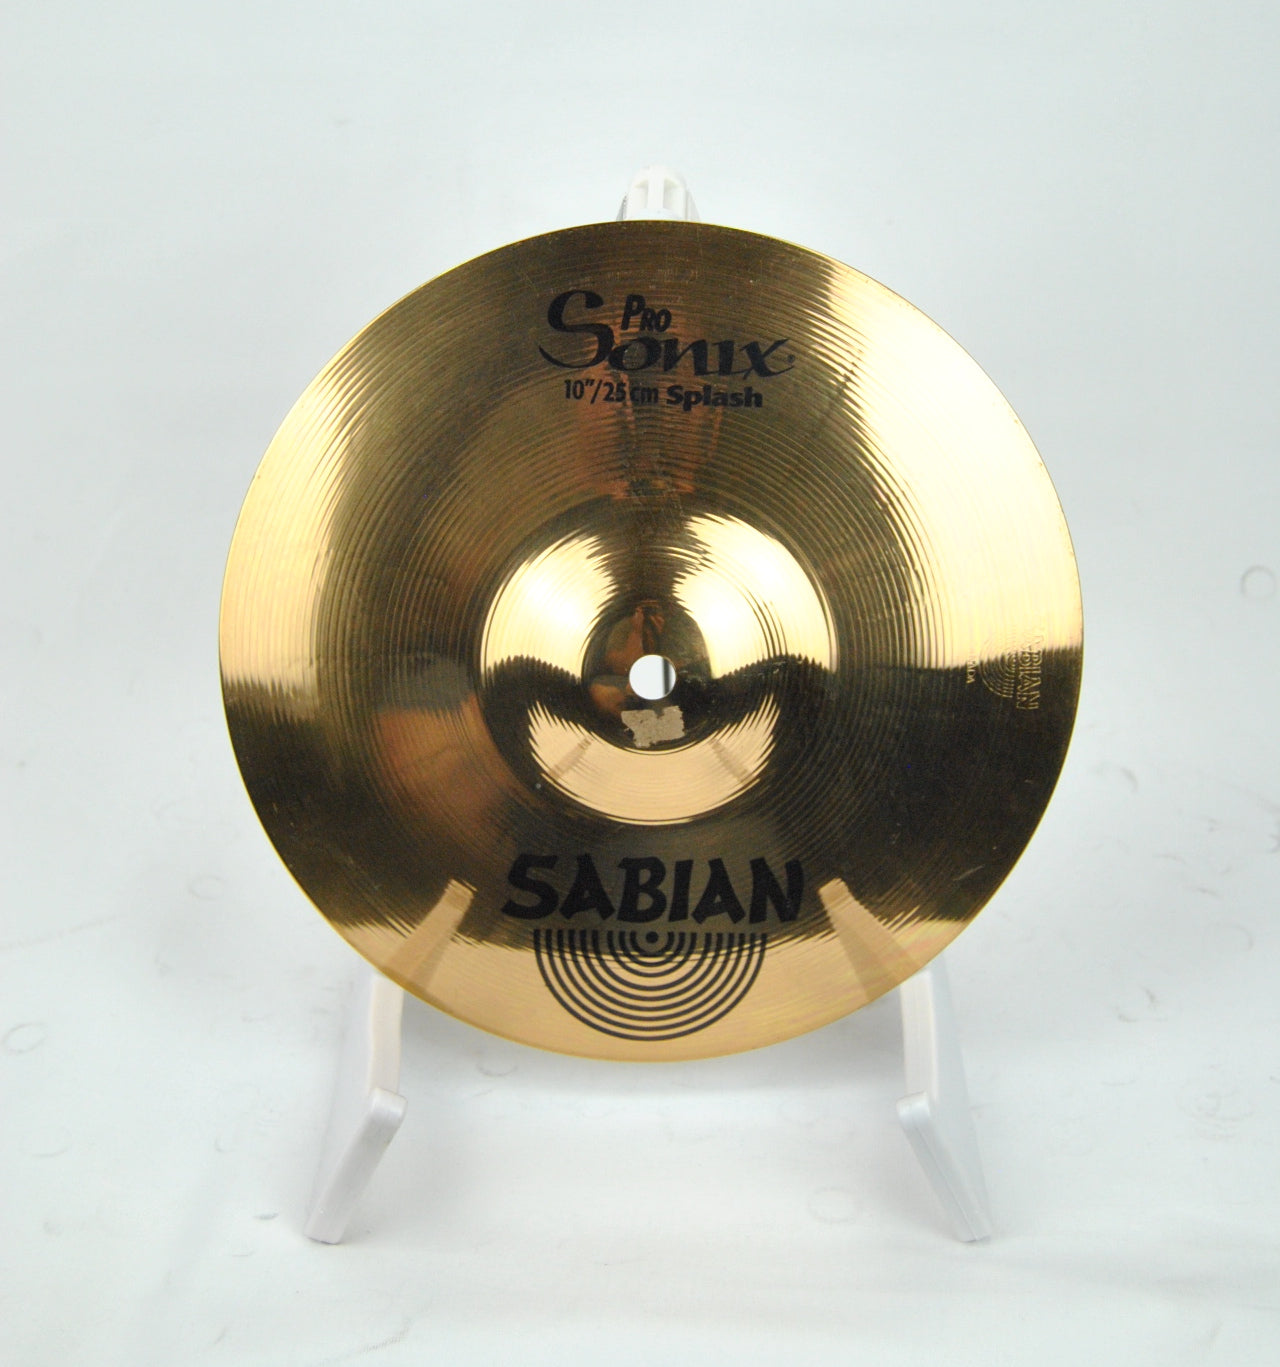 Sabian Pro Sonix 10“ Splash